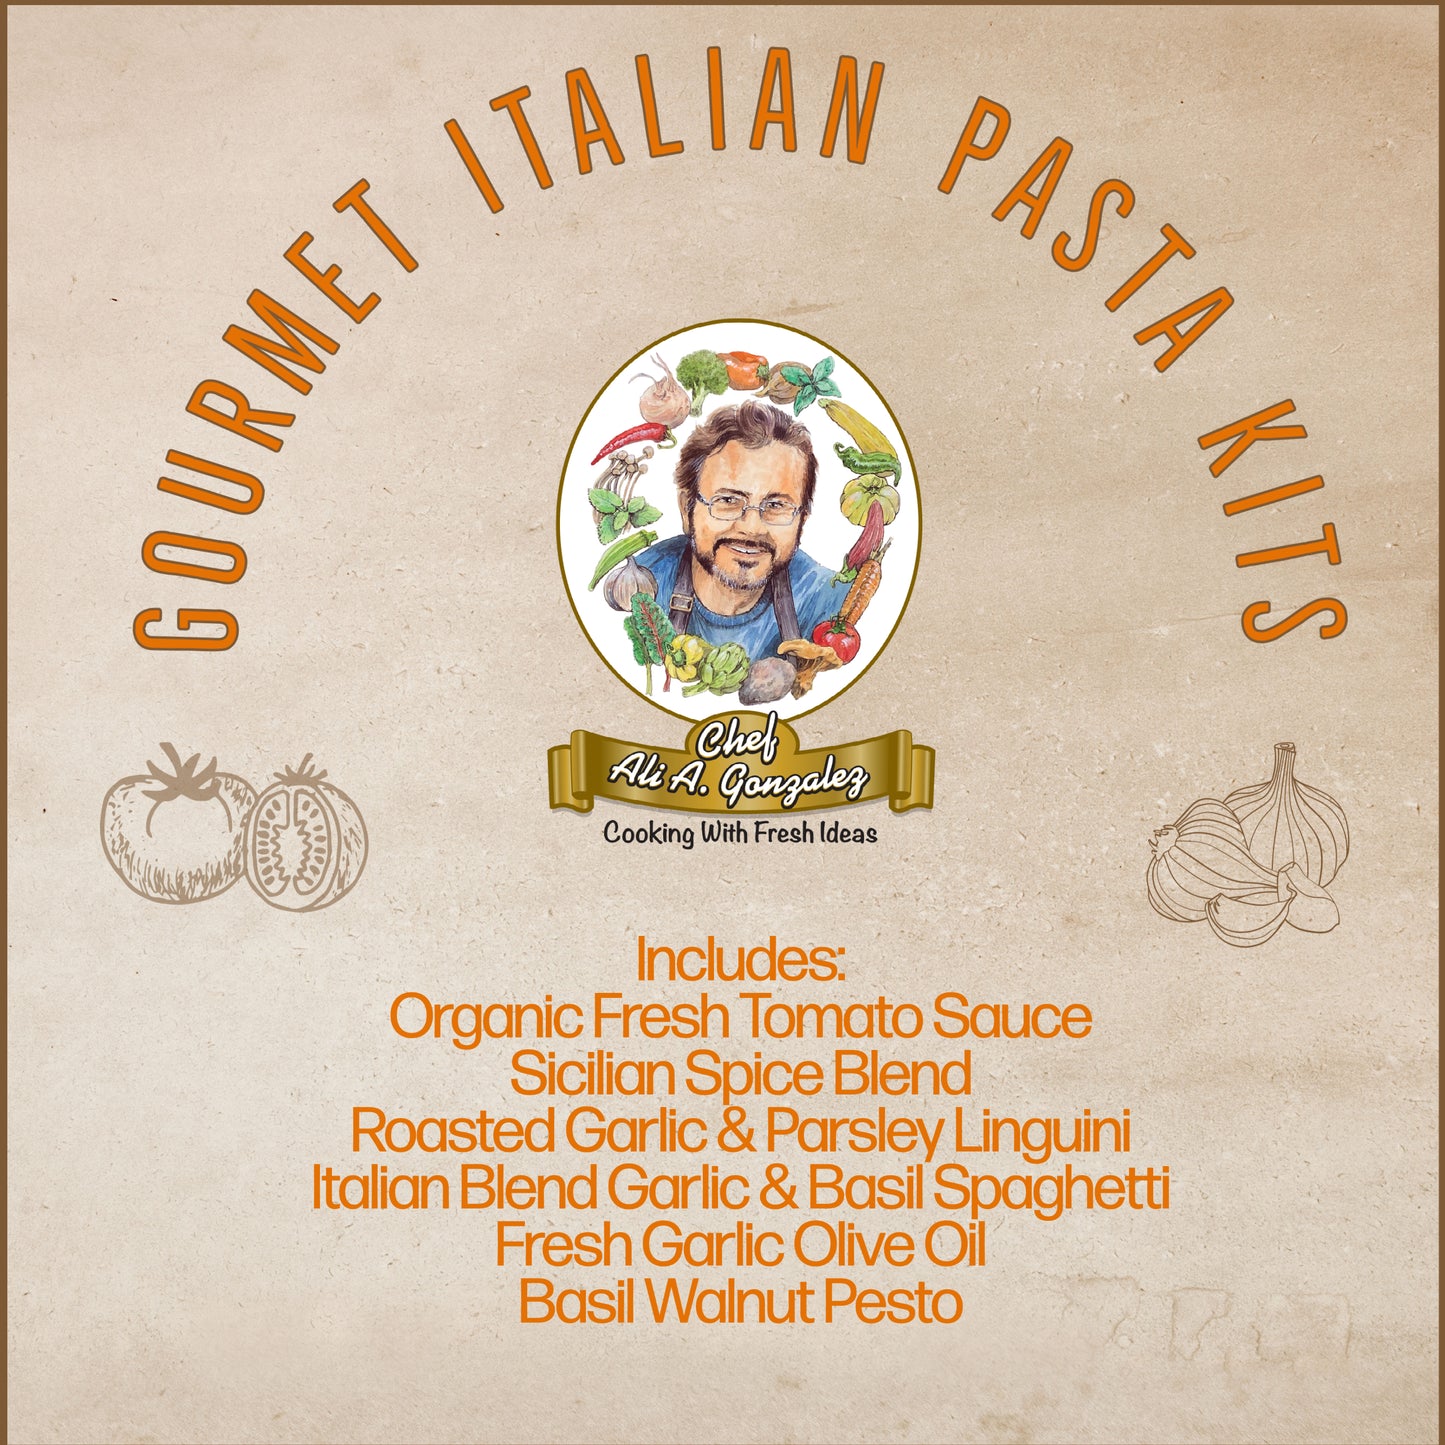 Gourmet Italian Pasta Kits